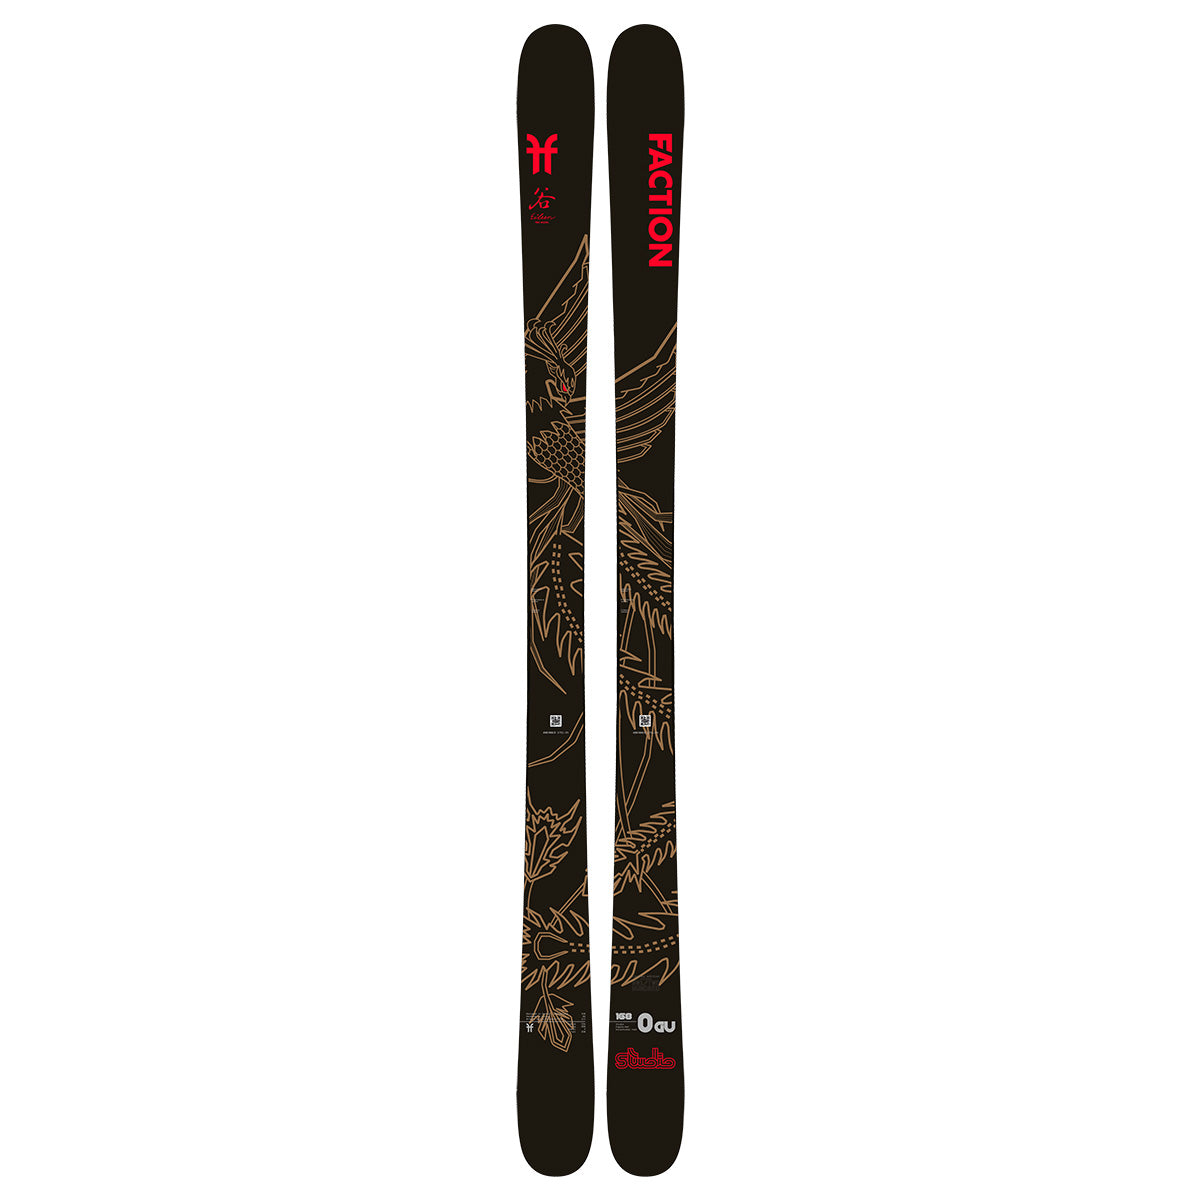 Faction Skis x Eileen Gu | Studio 0 Gu | Limited Edition Ski 